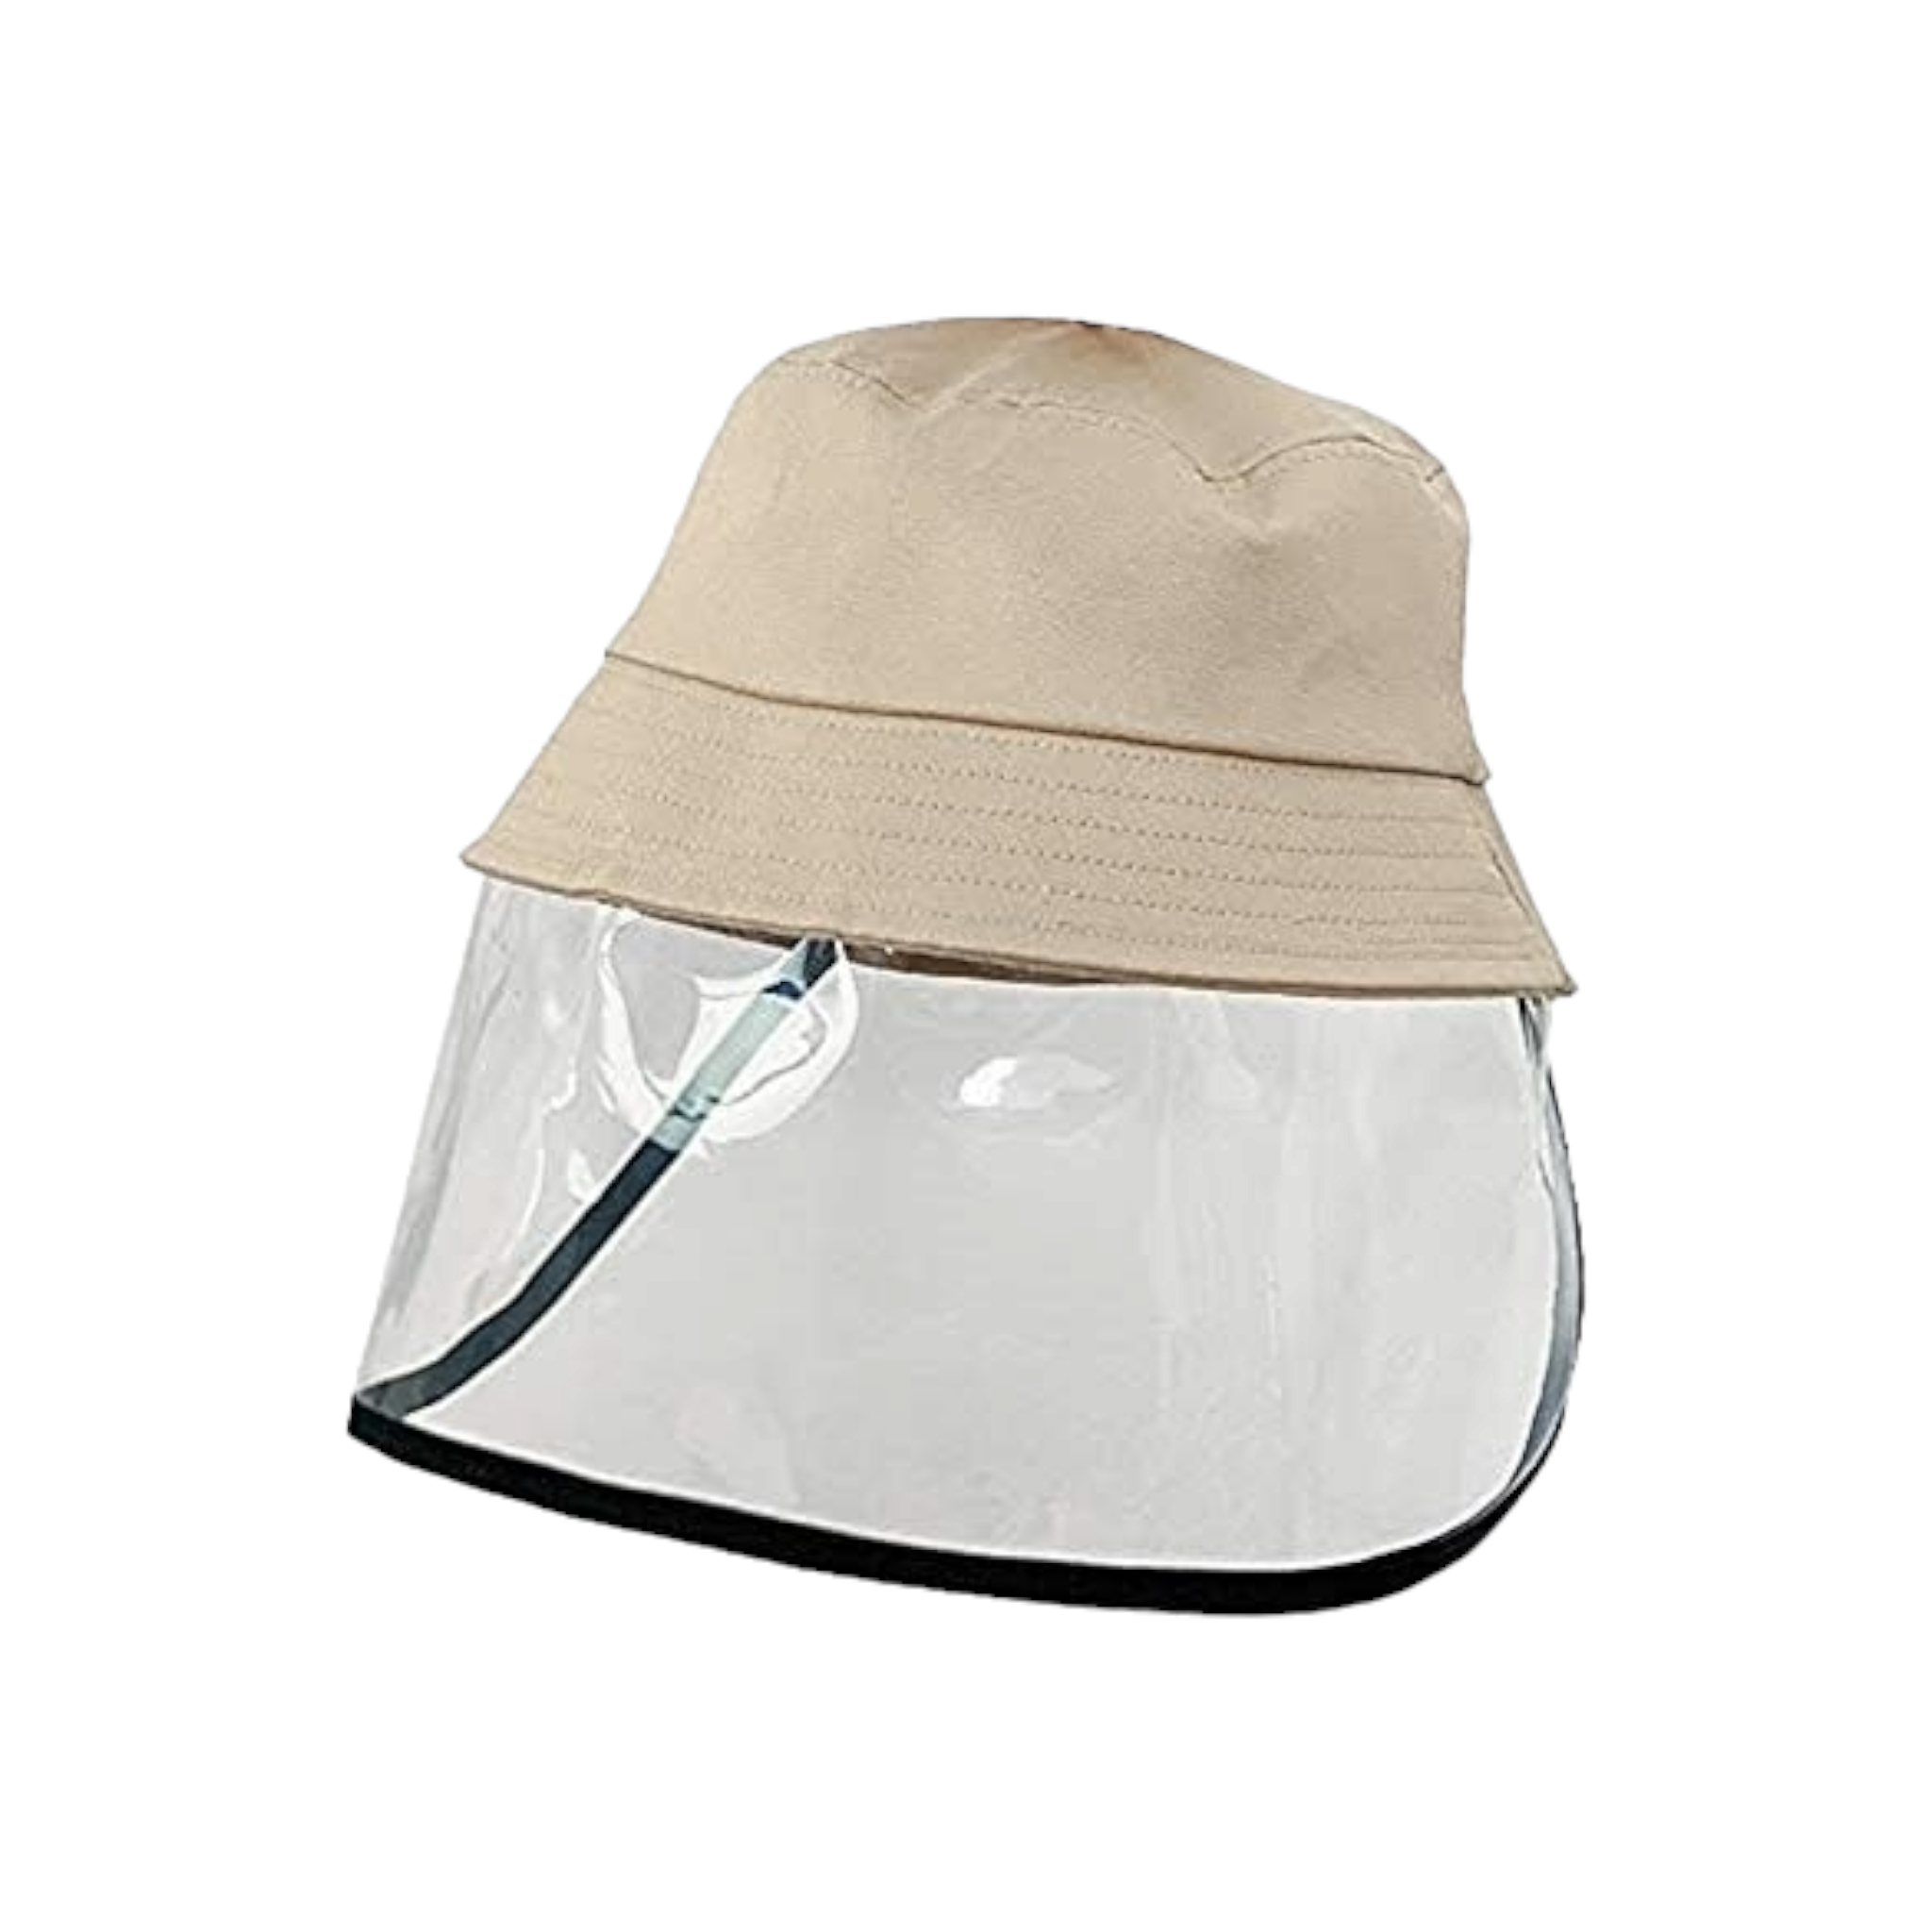 Kids Bucket Hat Bob with Face Shield Screen Anti Splash & Protection